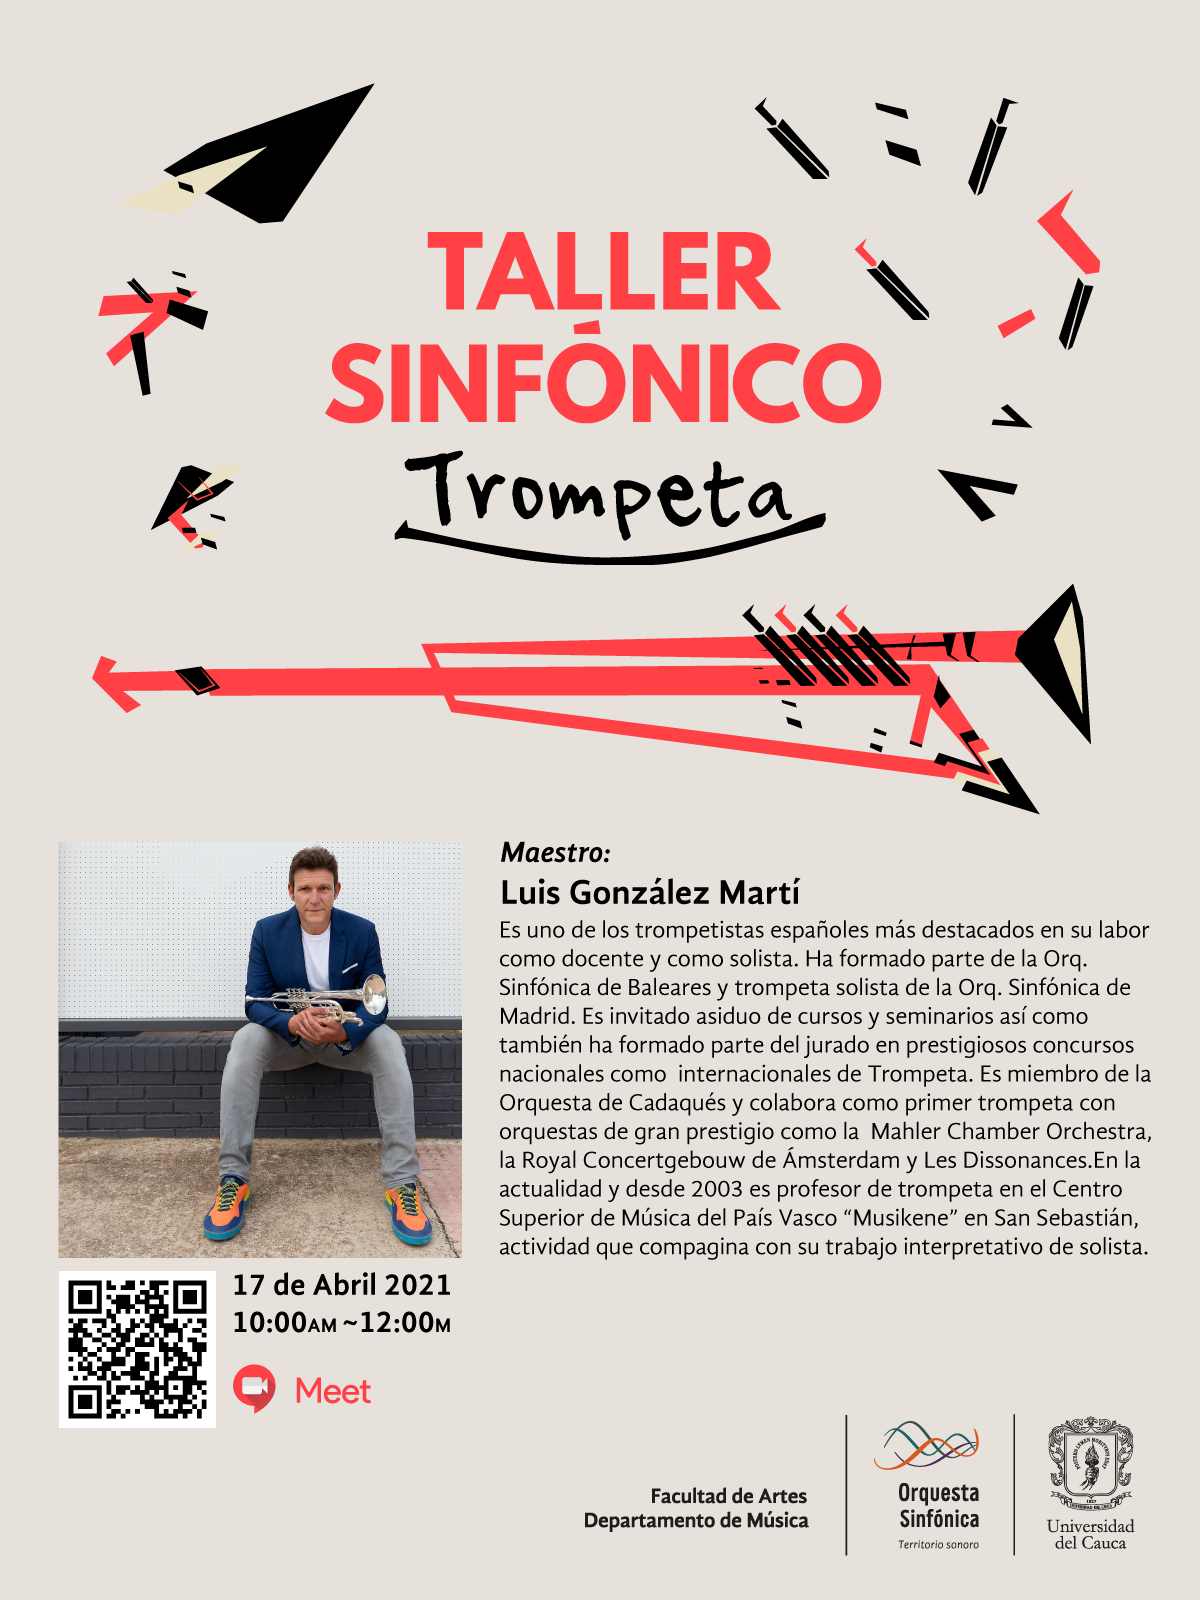 Taller Sinfónico de Trompeta con Luis González Martí.